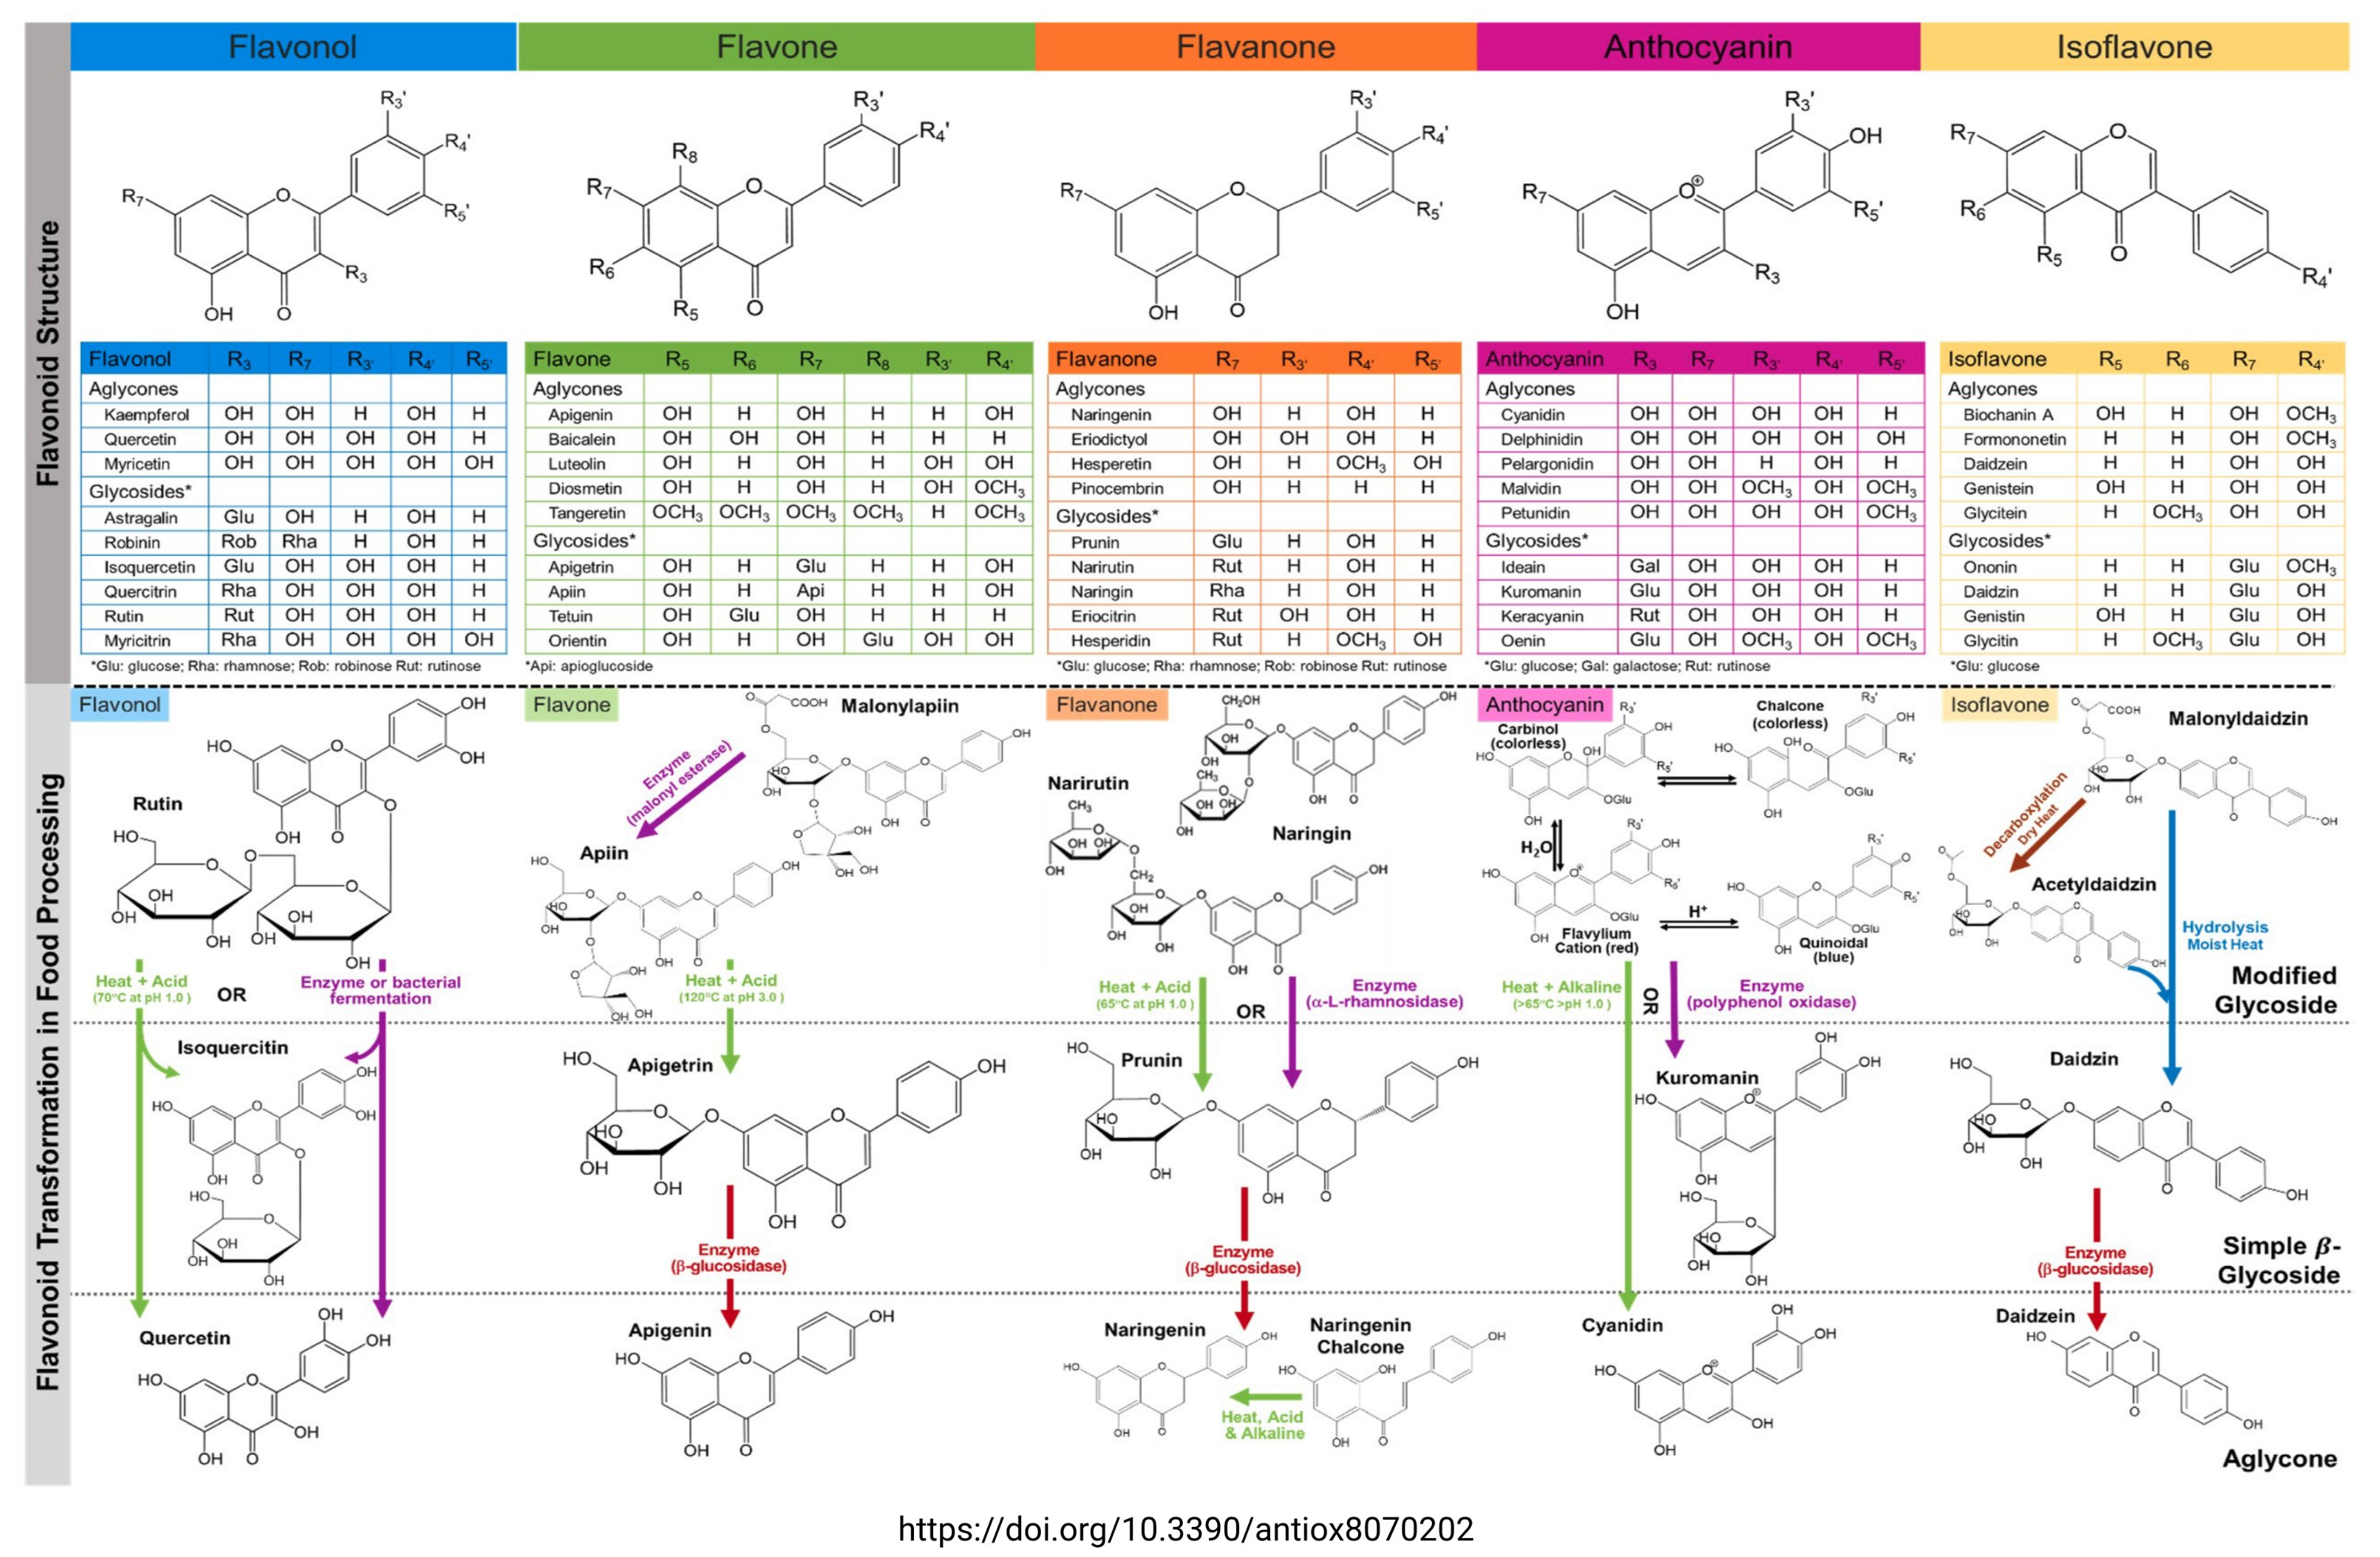 Biochemical diversity of flavonoids (Tweet #42)